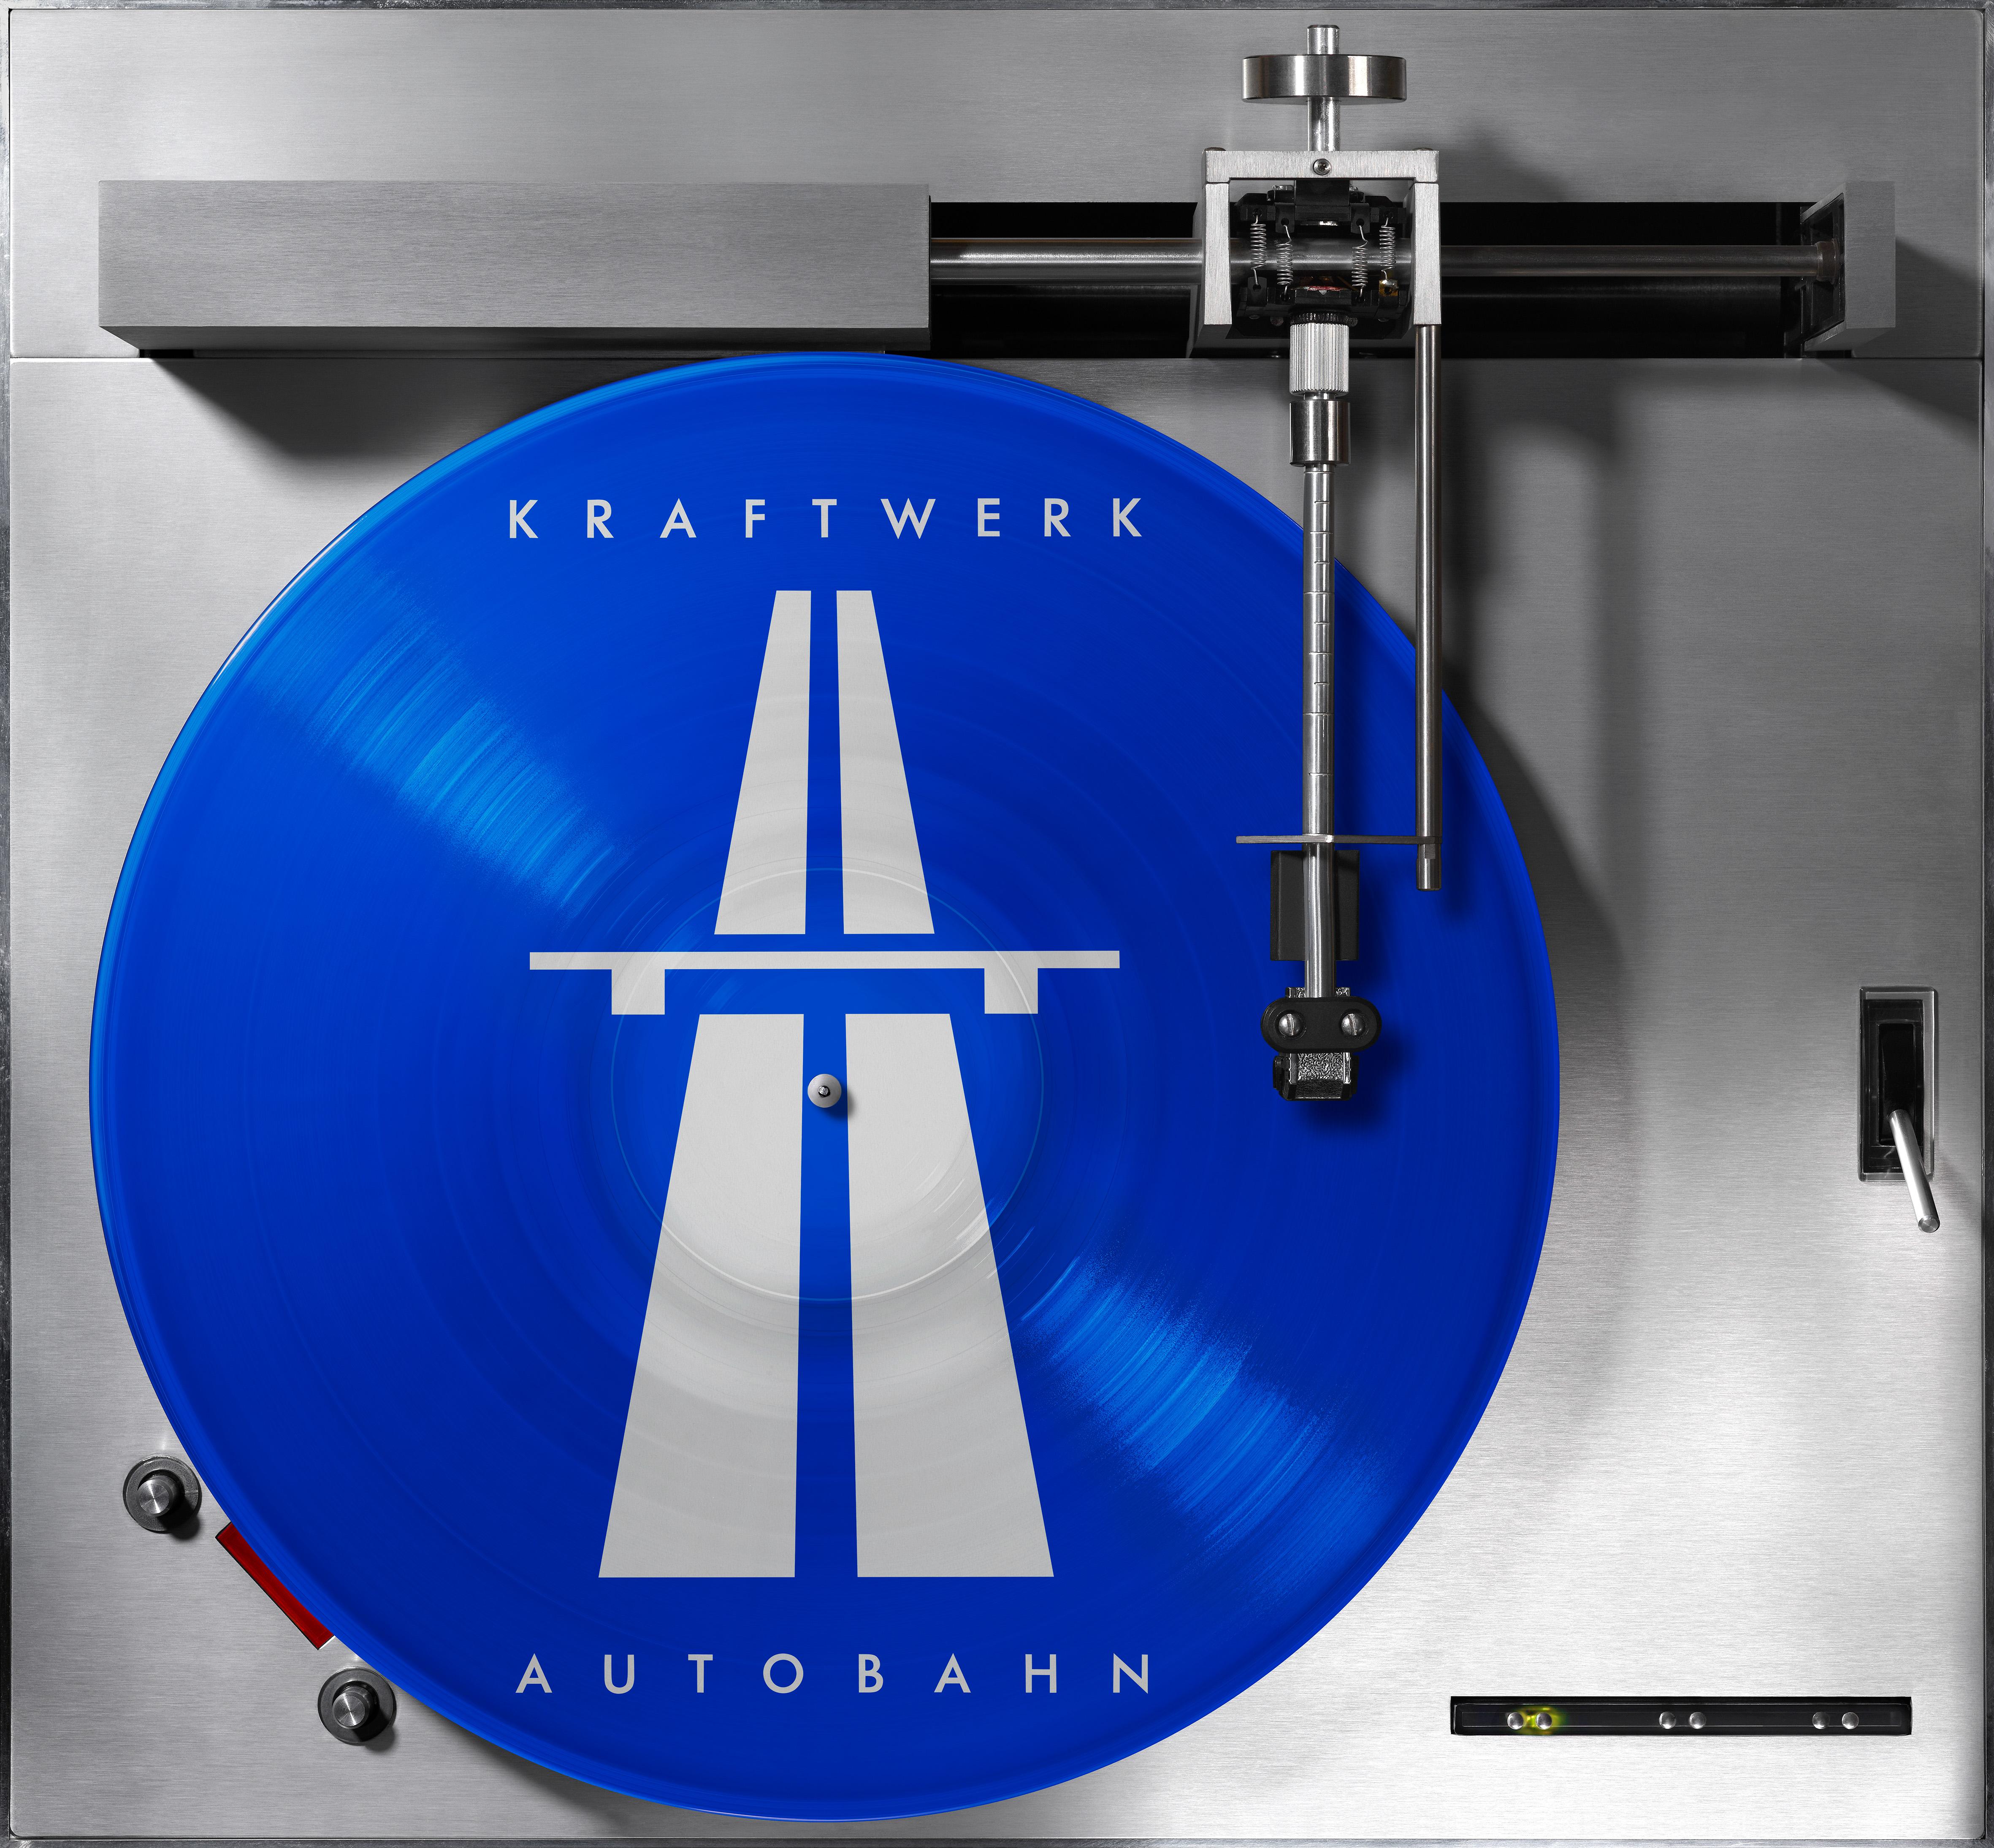 Harman Kardon, Kraftwerk - Autobahn 2, World Records (photographie)